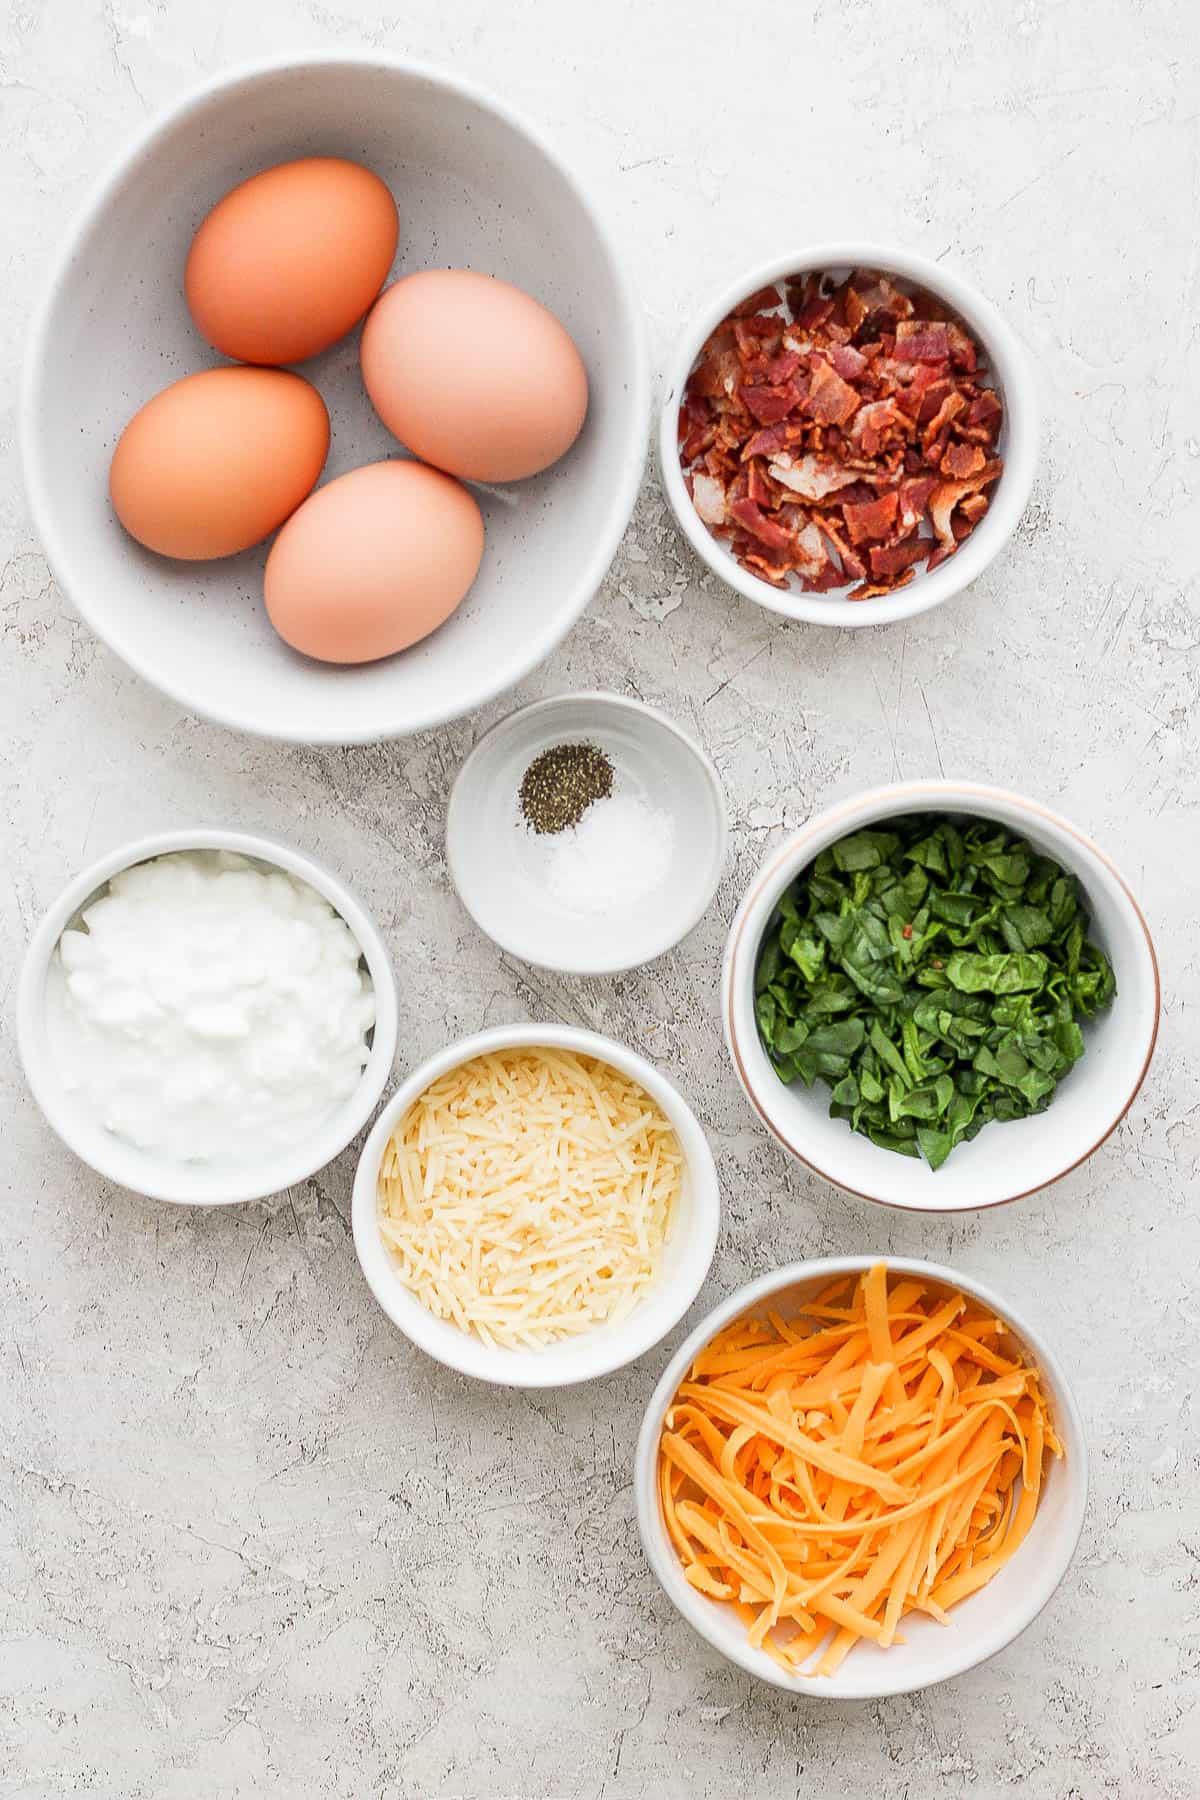 Ingredients for instant pot egg bites in separate bowls.